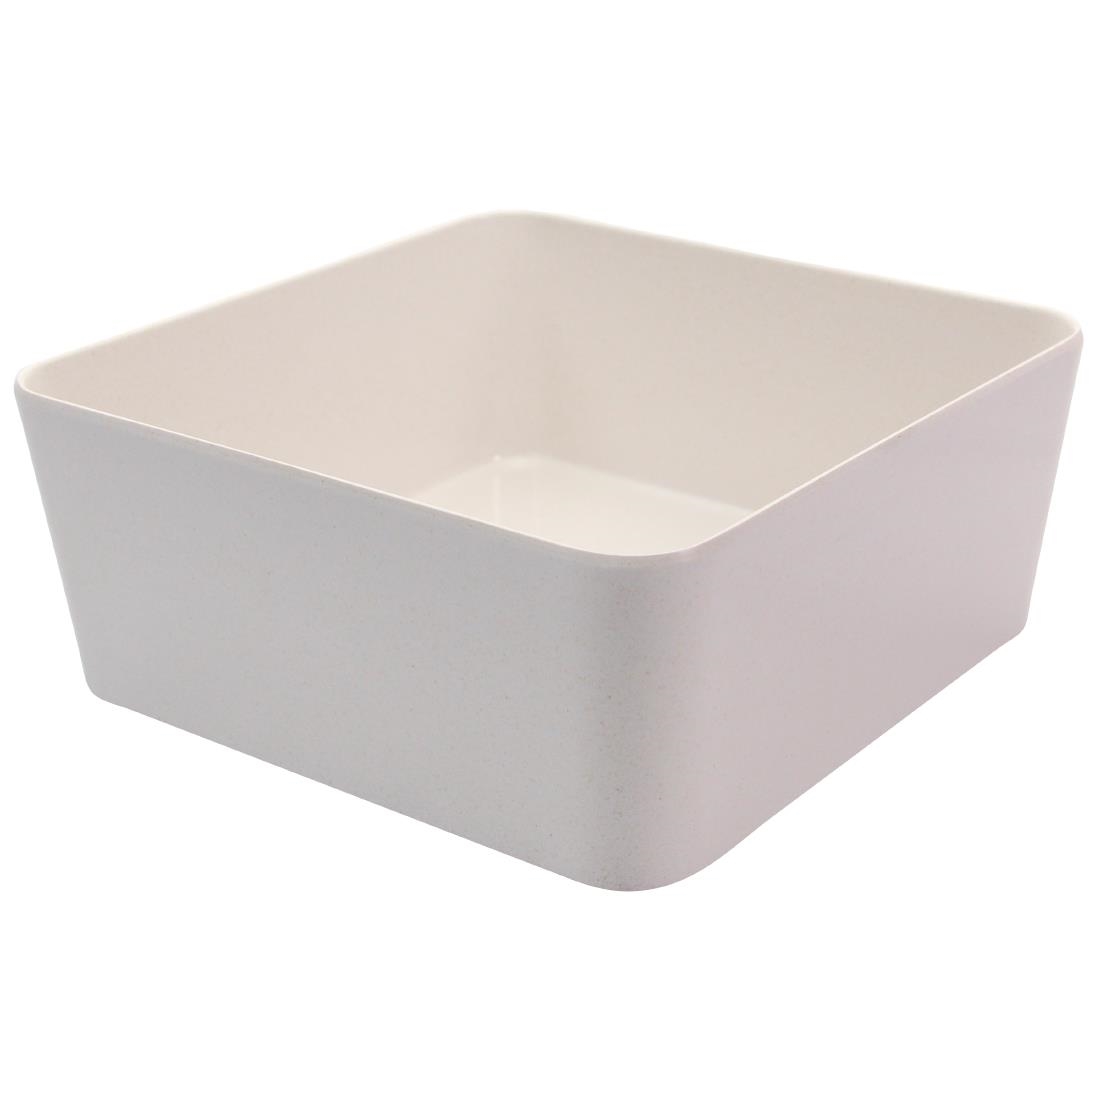 Creative Tokyo Melamine Large Bento Box Insert White 170x170x70mm (Pack of 6)